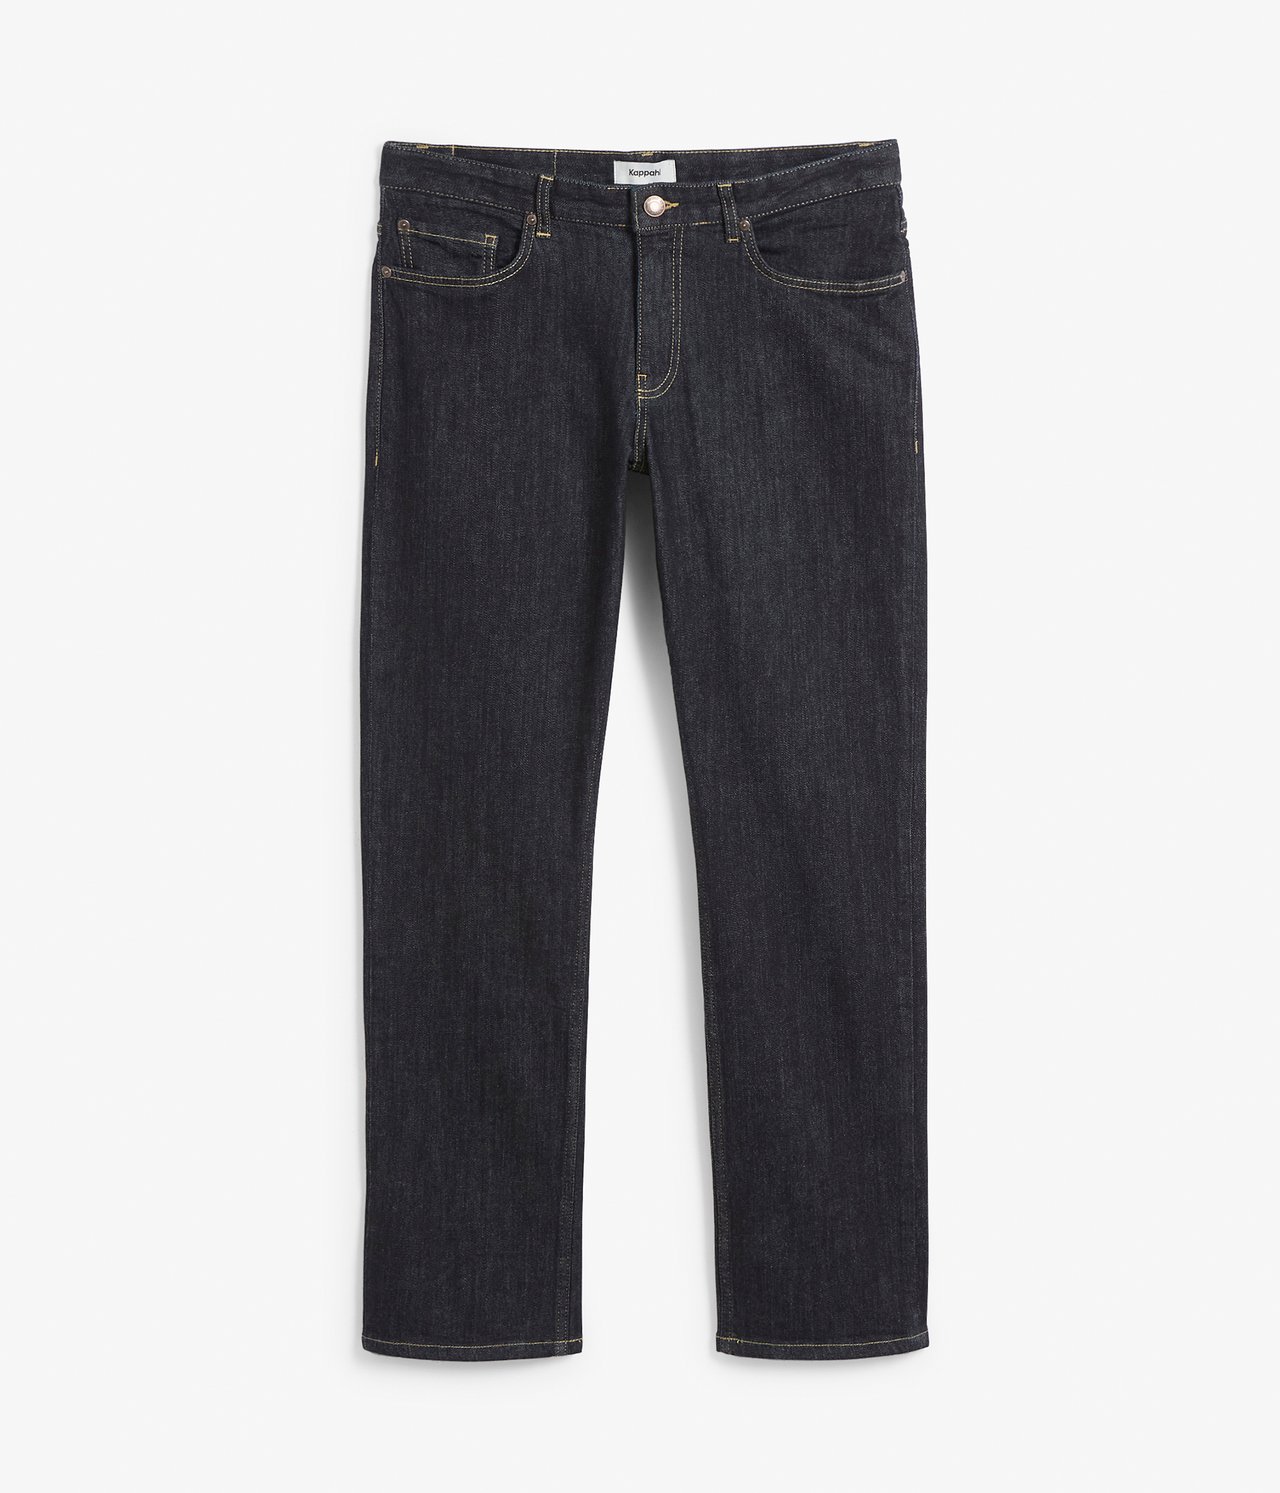 Hank regular jeans - Denimi - 6